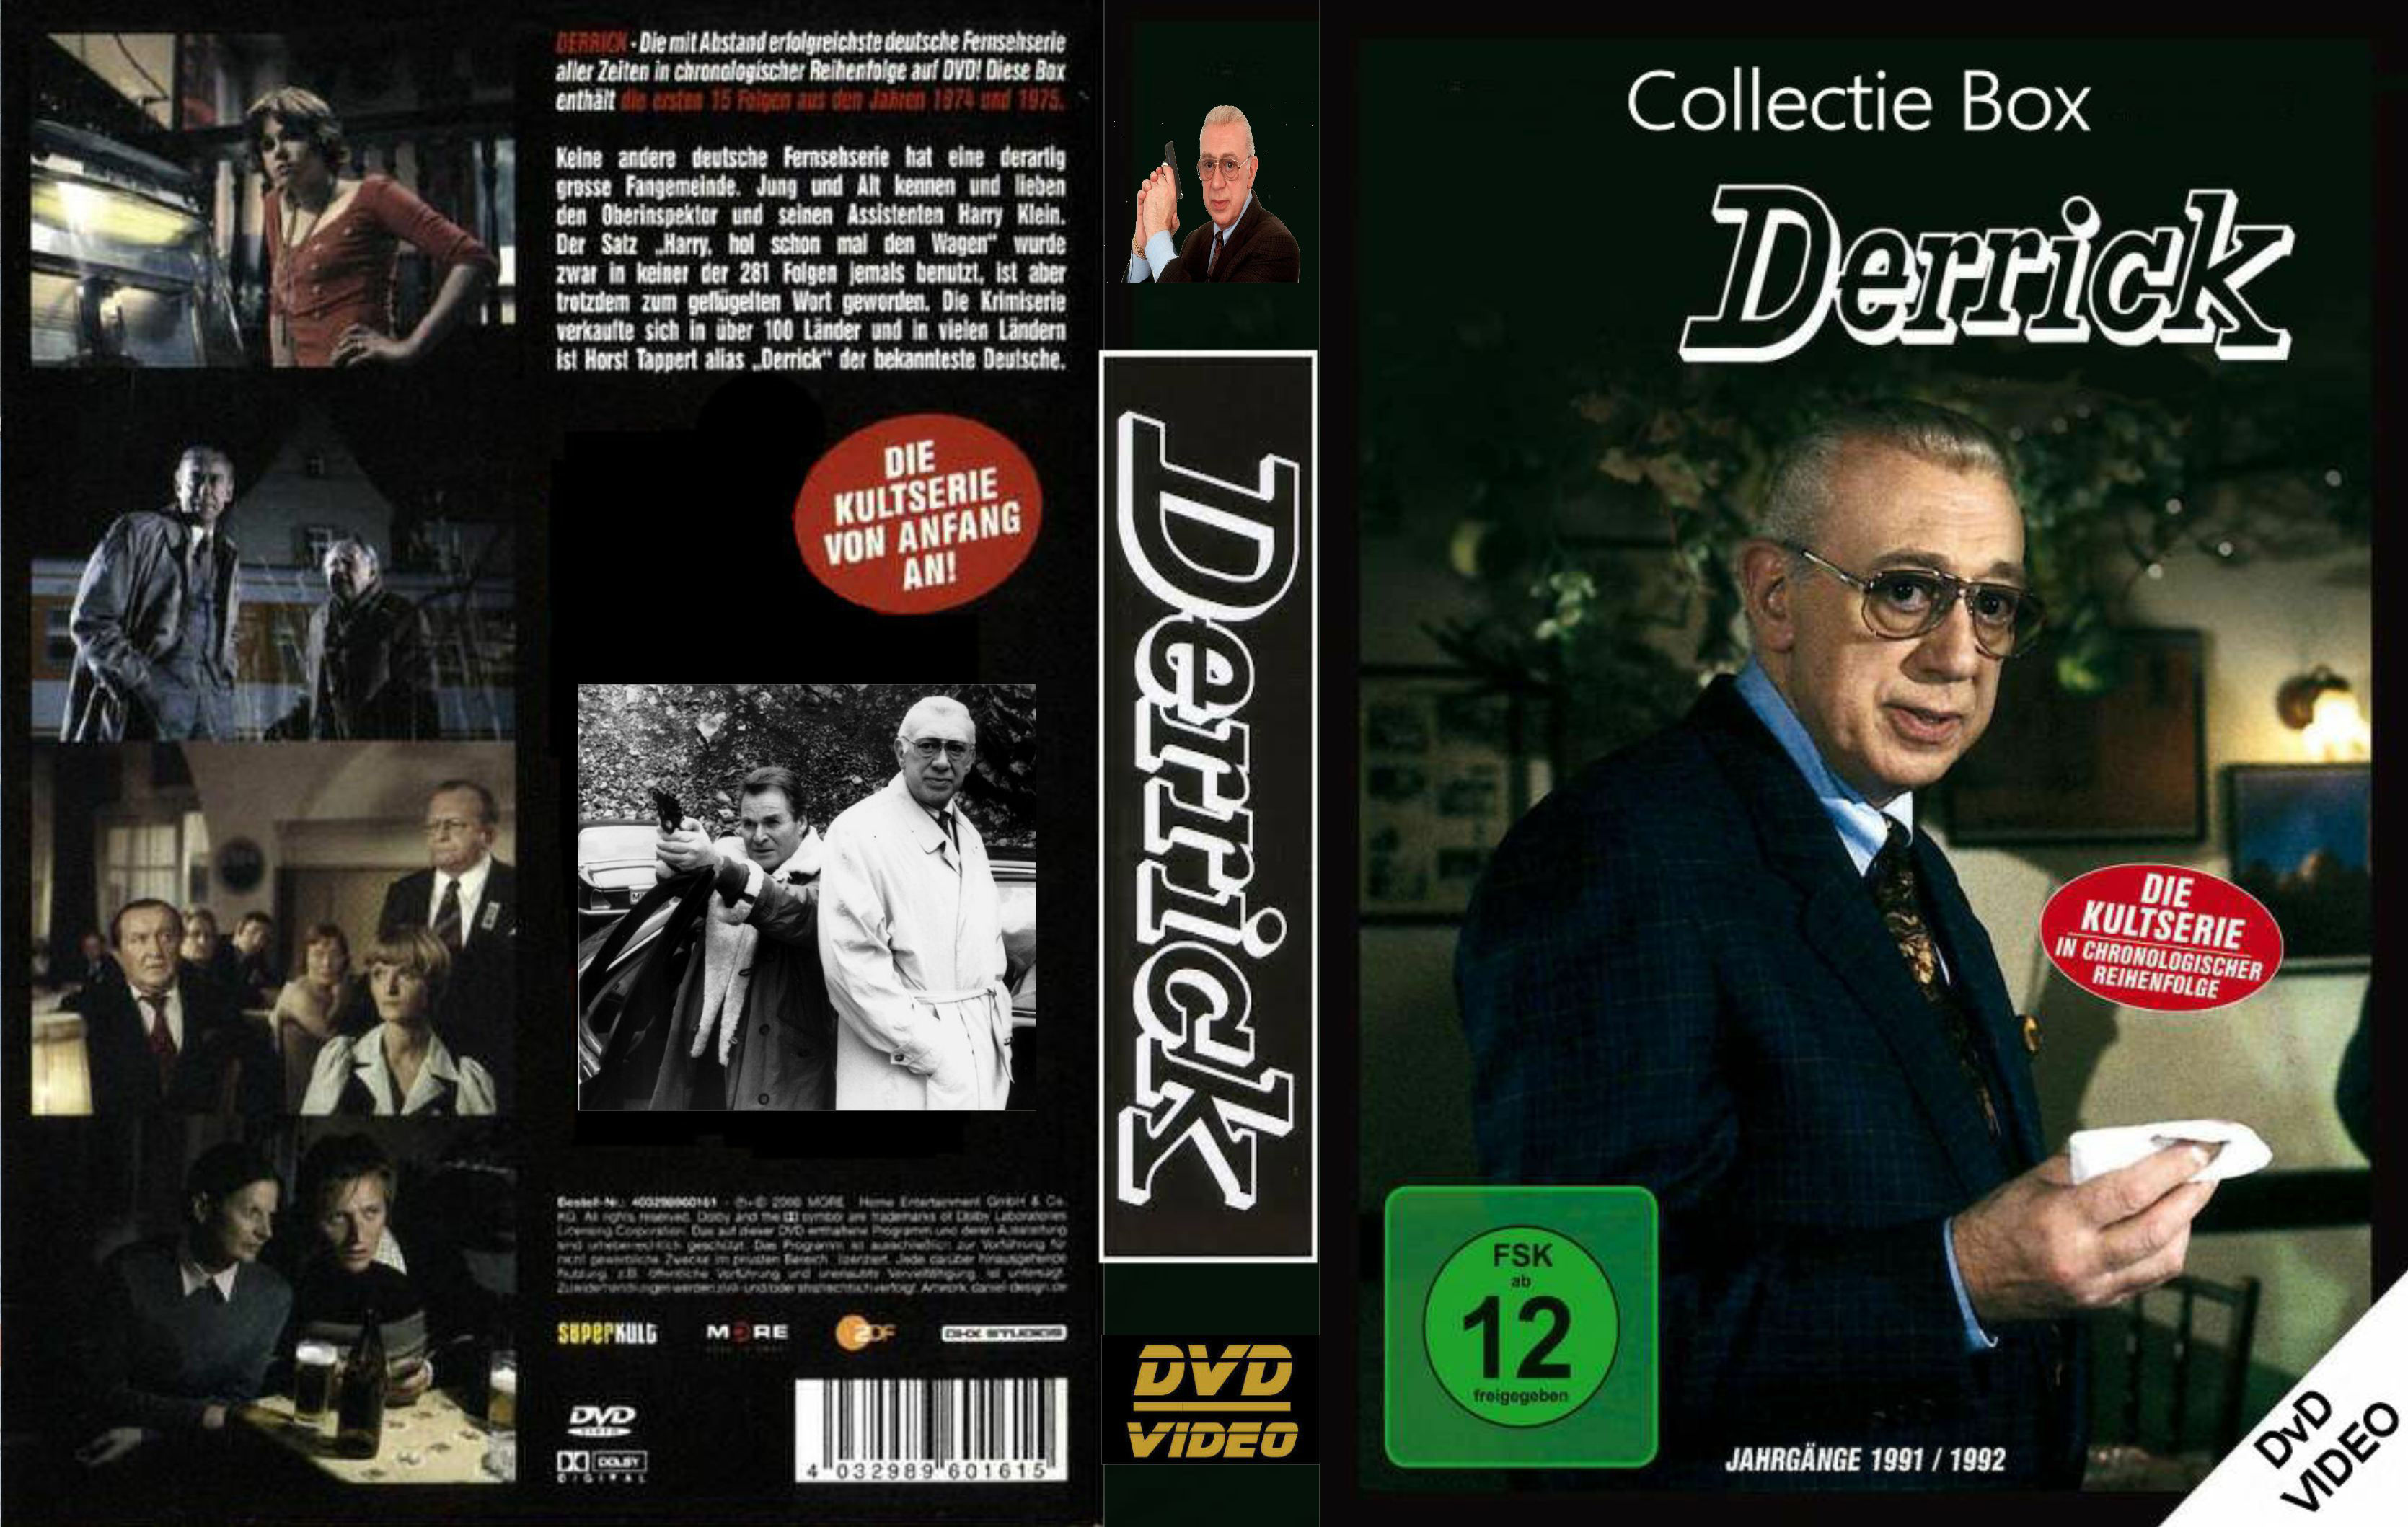 Derrick Collectie - DvD 7